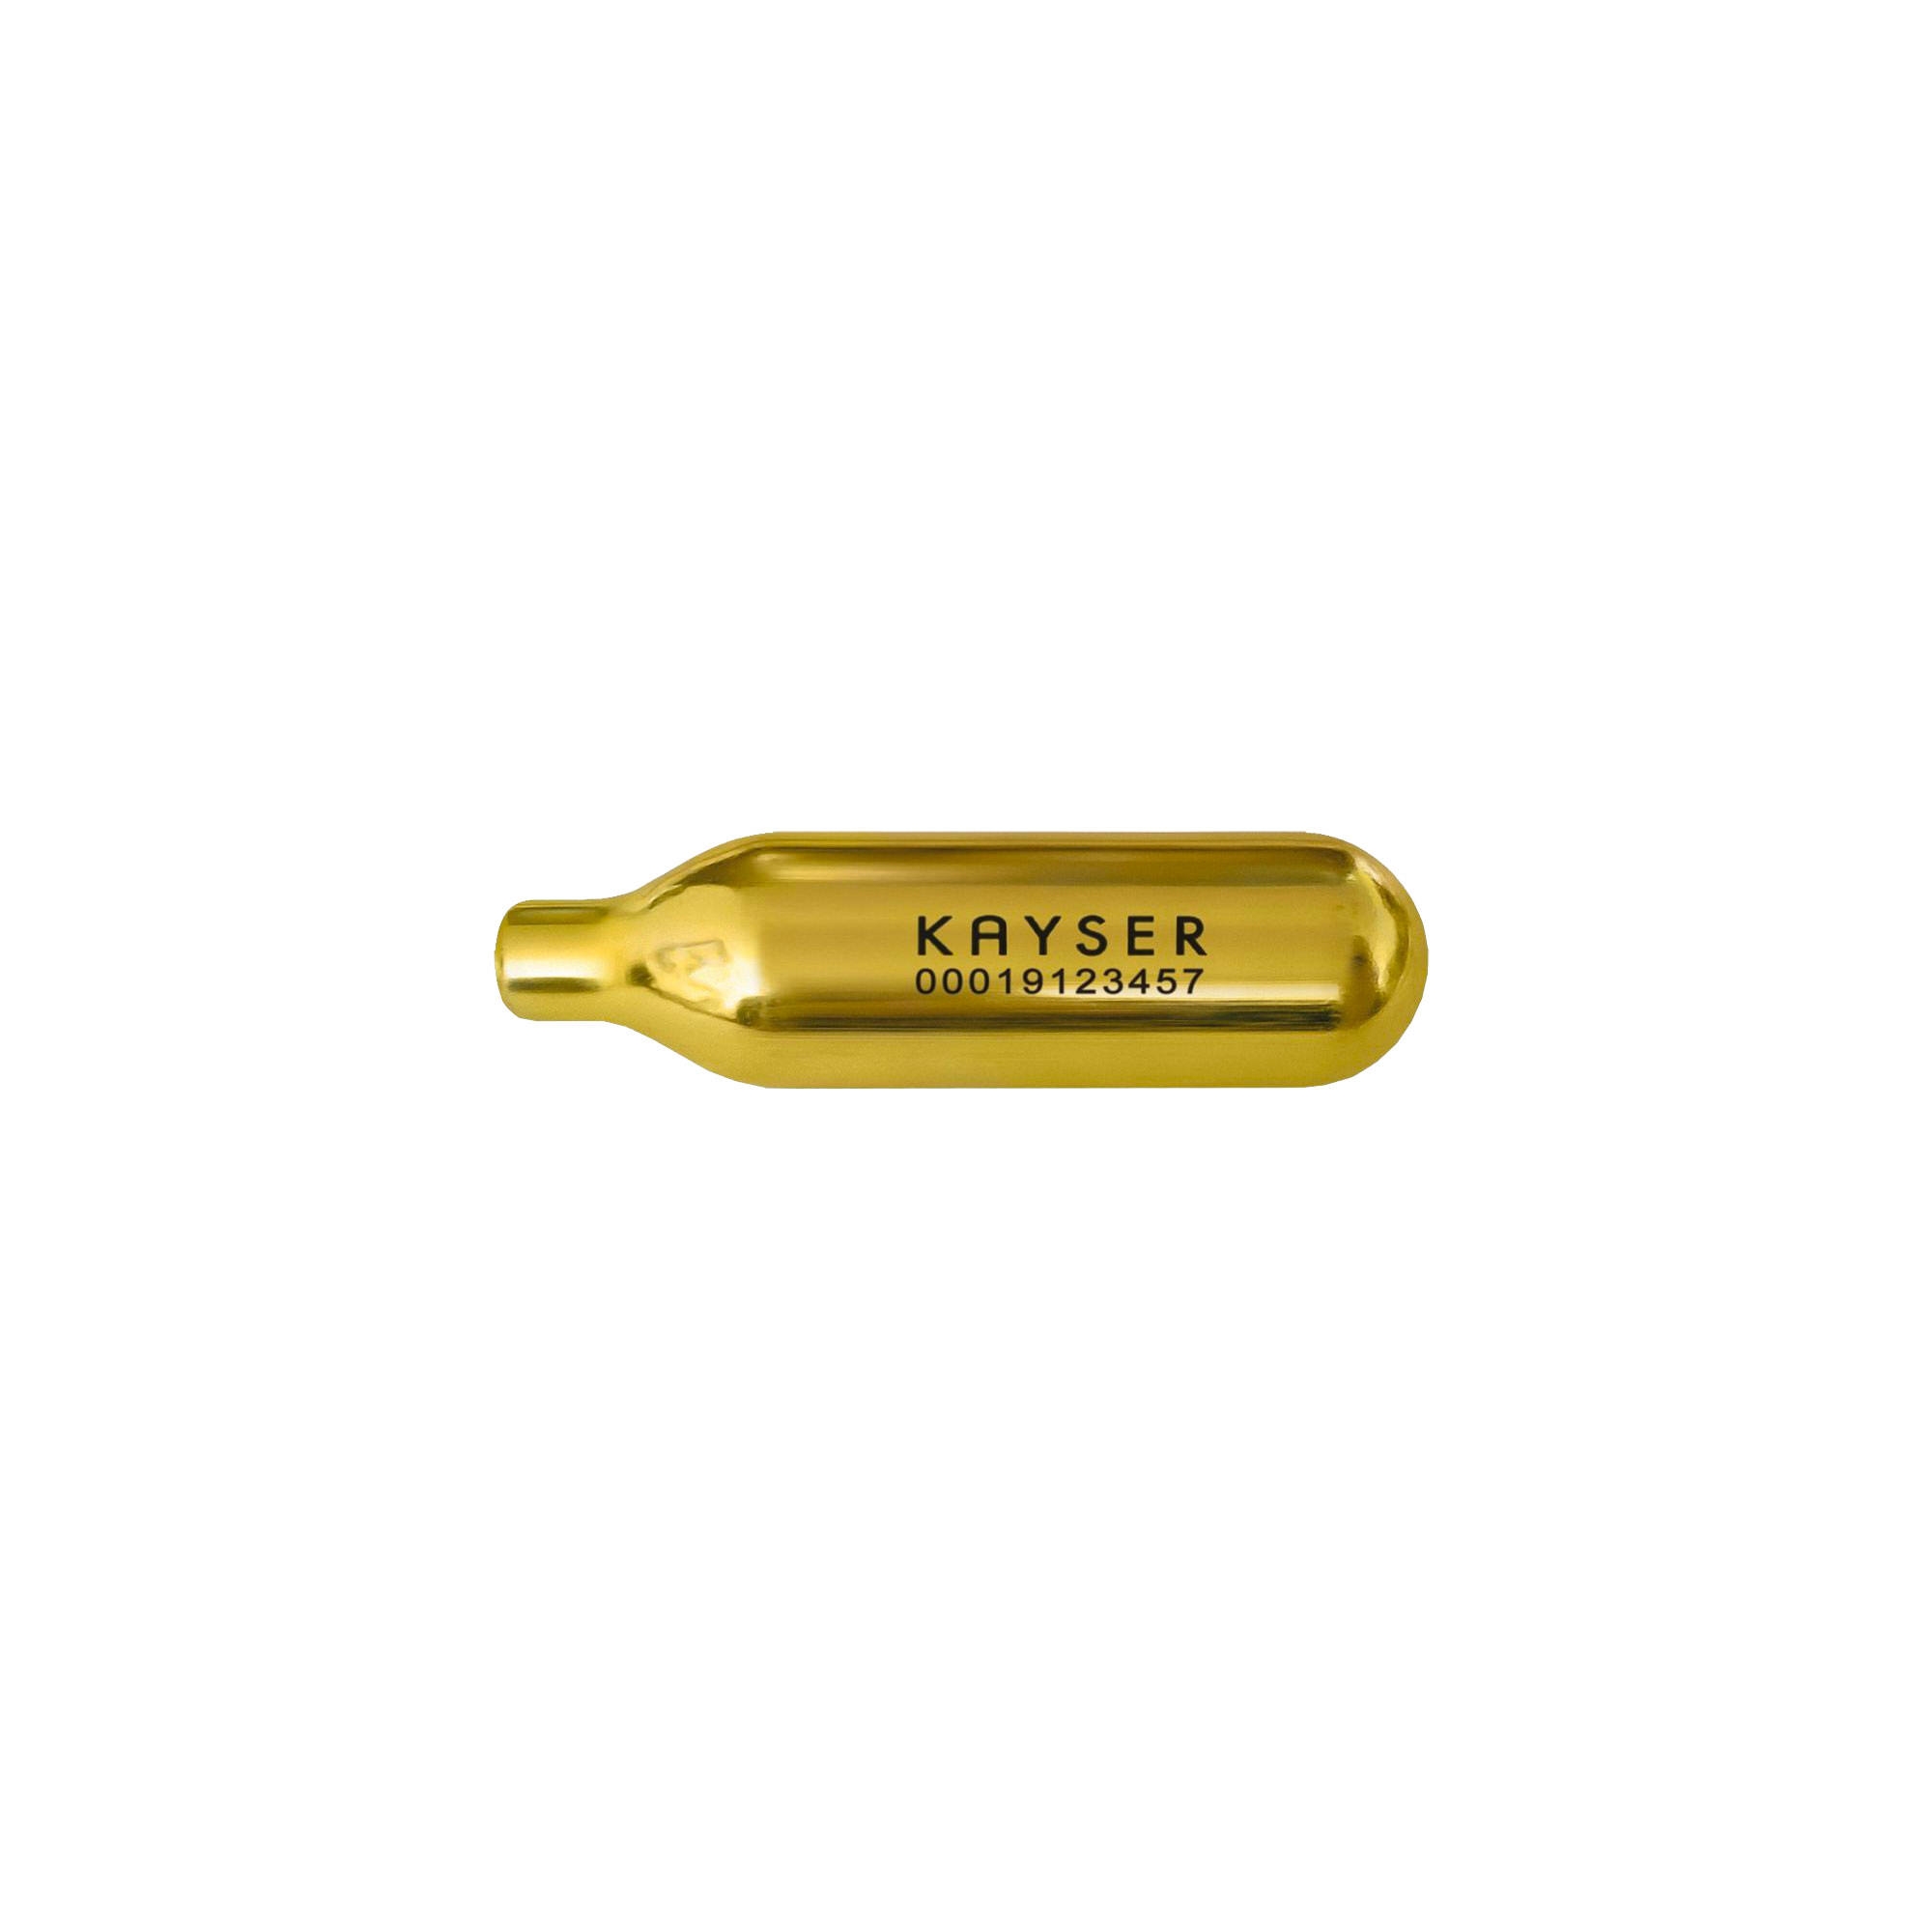 Kayser Soda Syphon Charger Set of 10 Image 2